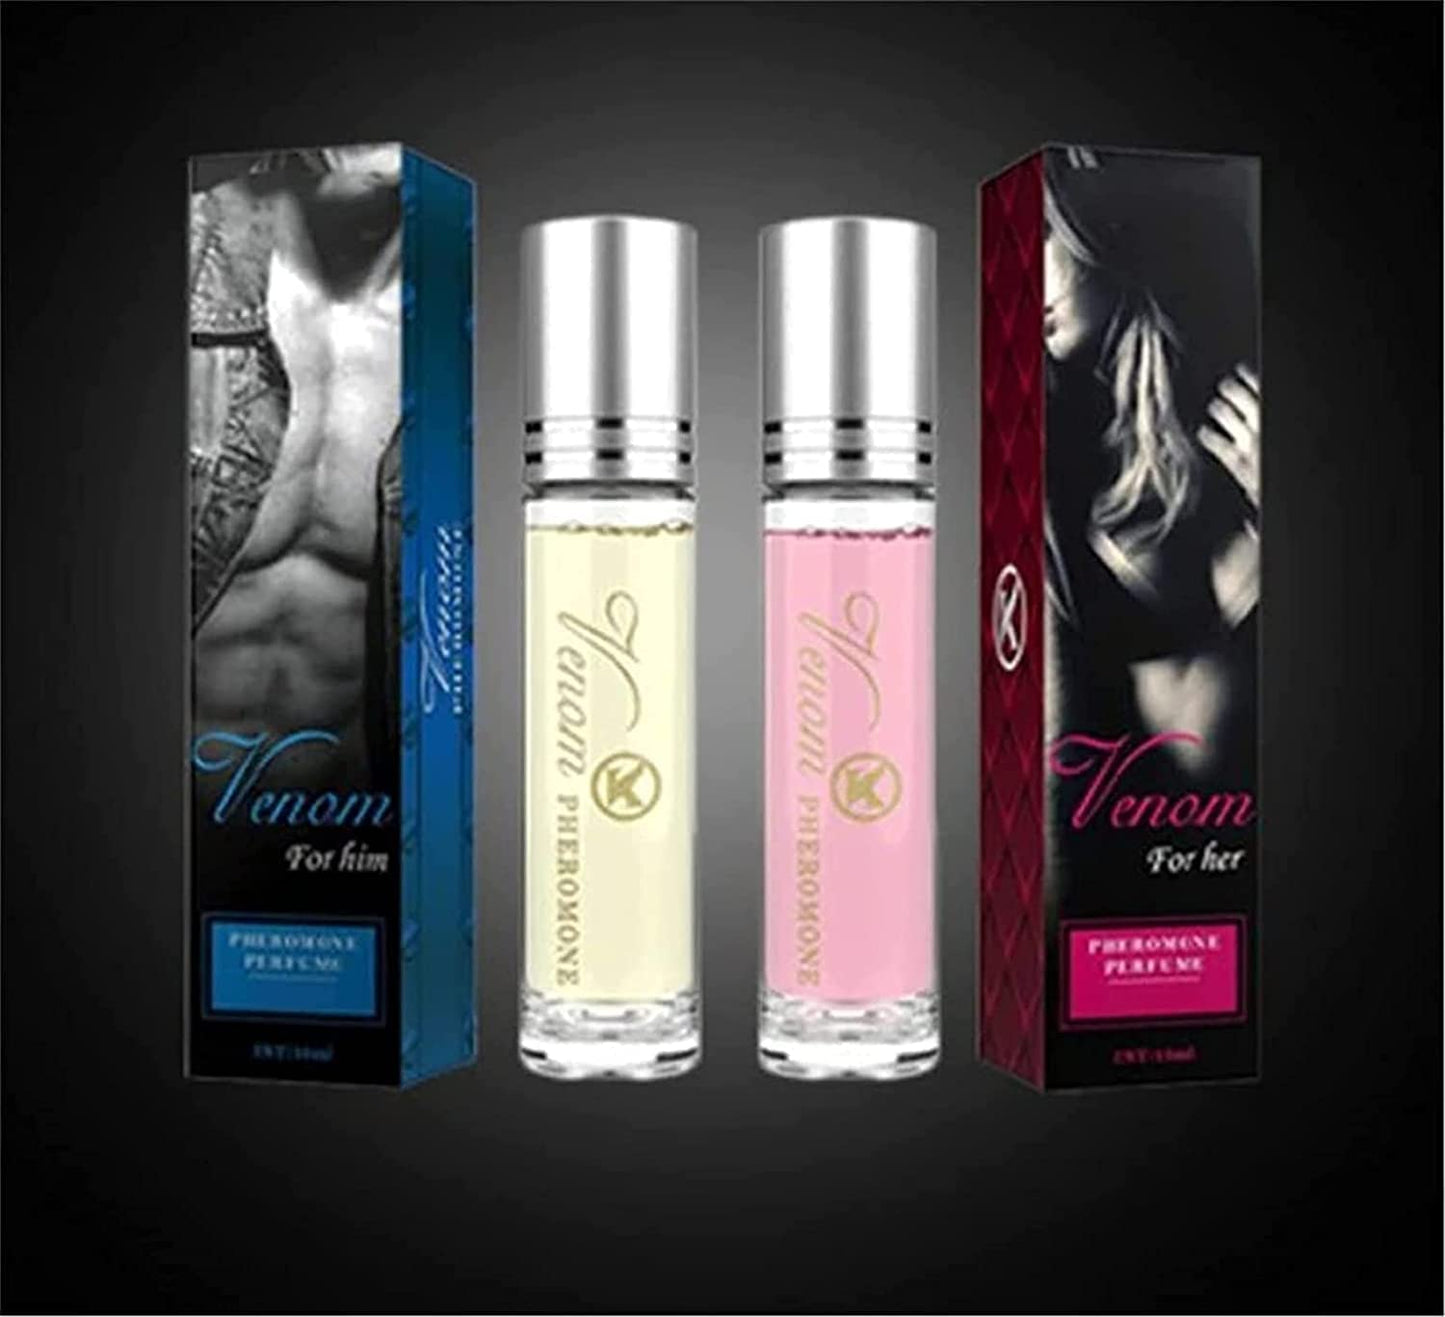 Lunex Phero perfume, Pheromone Oil for Women To Attract Men, Venom Fragrance, Roll On Pheremone Oils for Woman, Pharamon Perfume for Women, Pheromone Essential Oil, Essence Oil